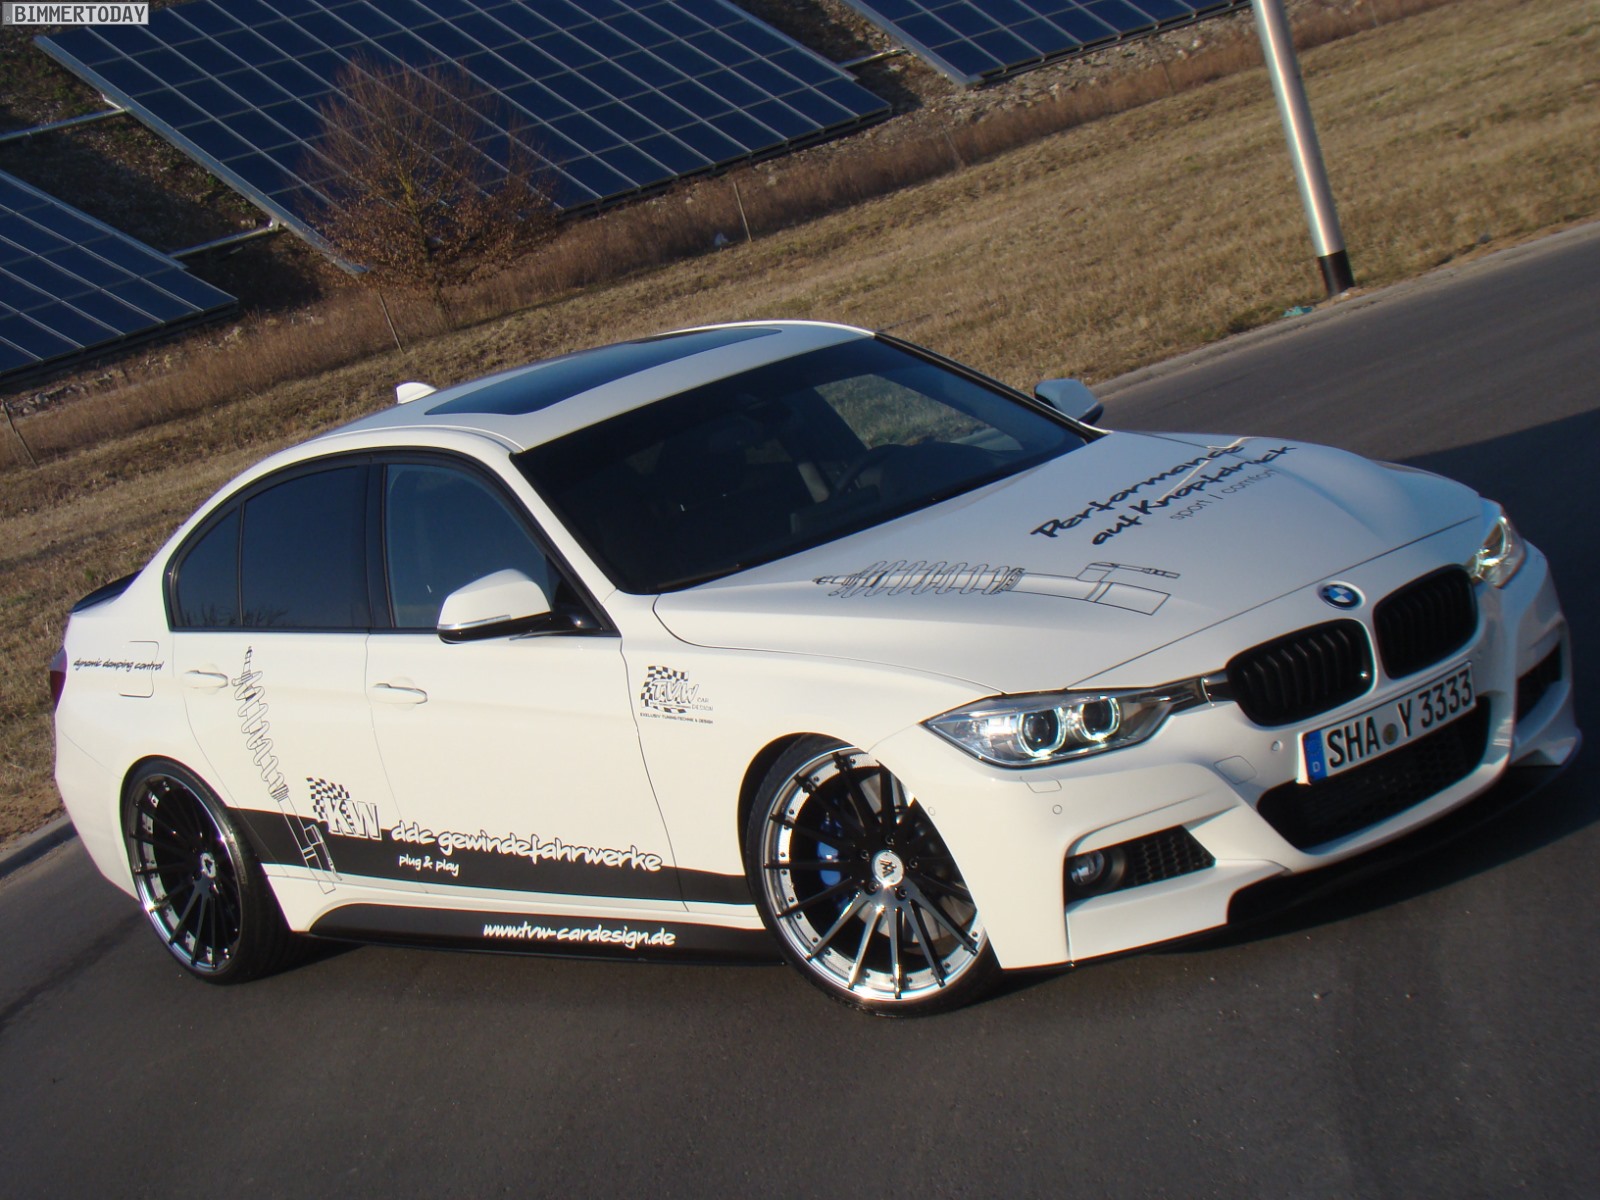 https://cdn.bimmertoday.de/wp-content/uploads/TVW-BMW-335i-F30-Tuning-3er-2013-03.jpg